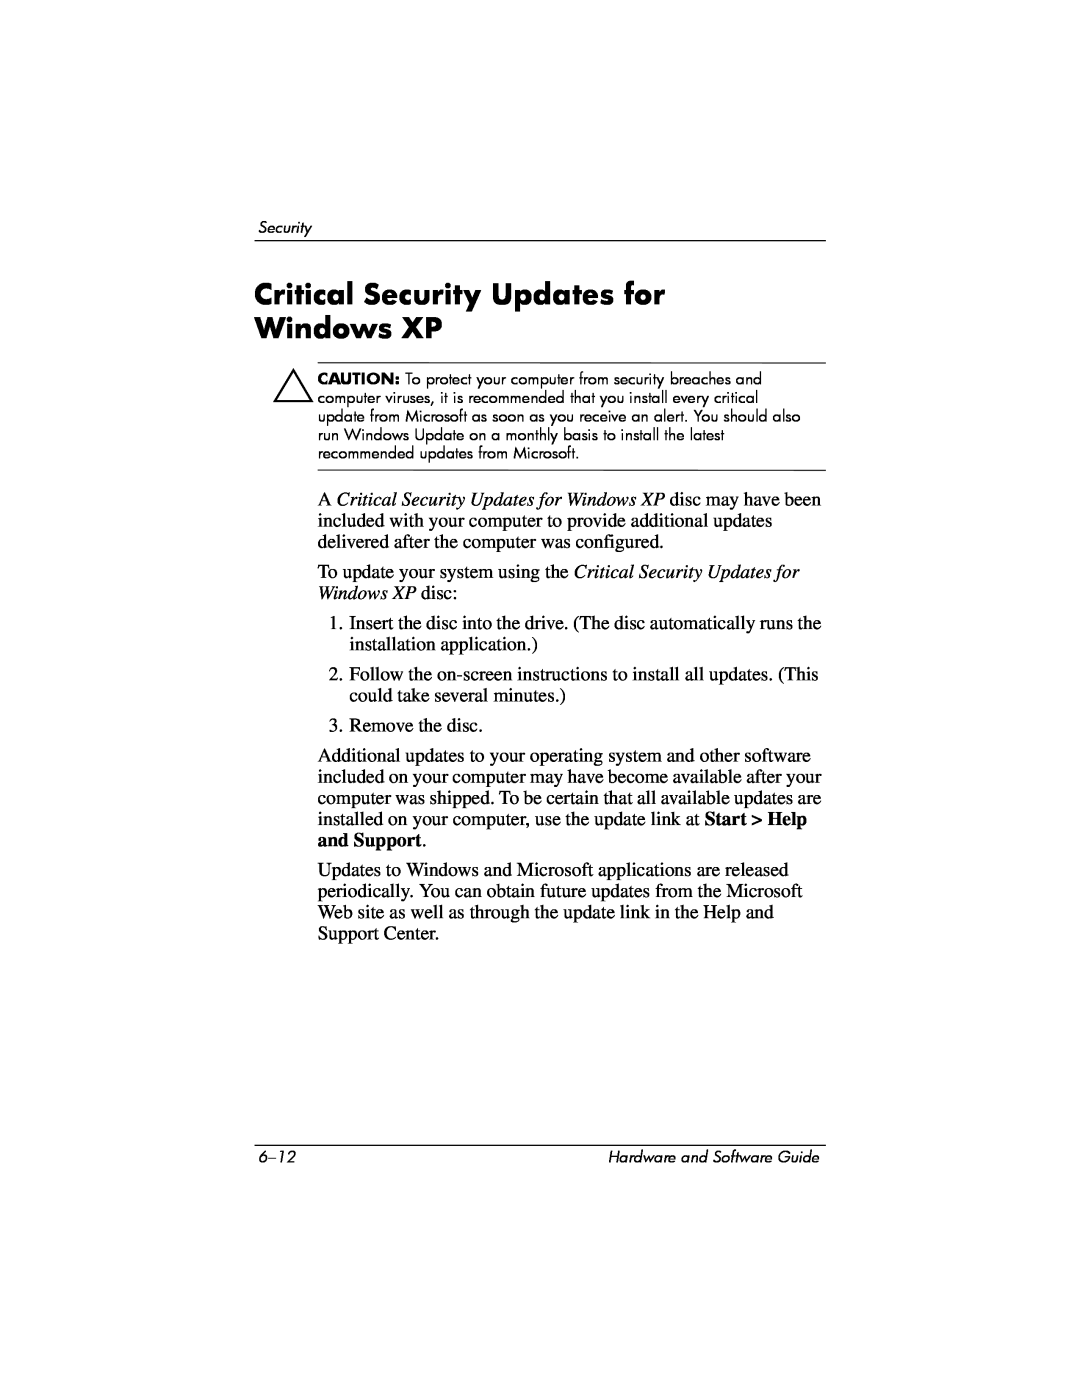 Compaq Presario M2000 manual Critical Security Updates for Windows XP 